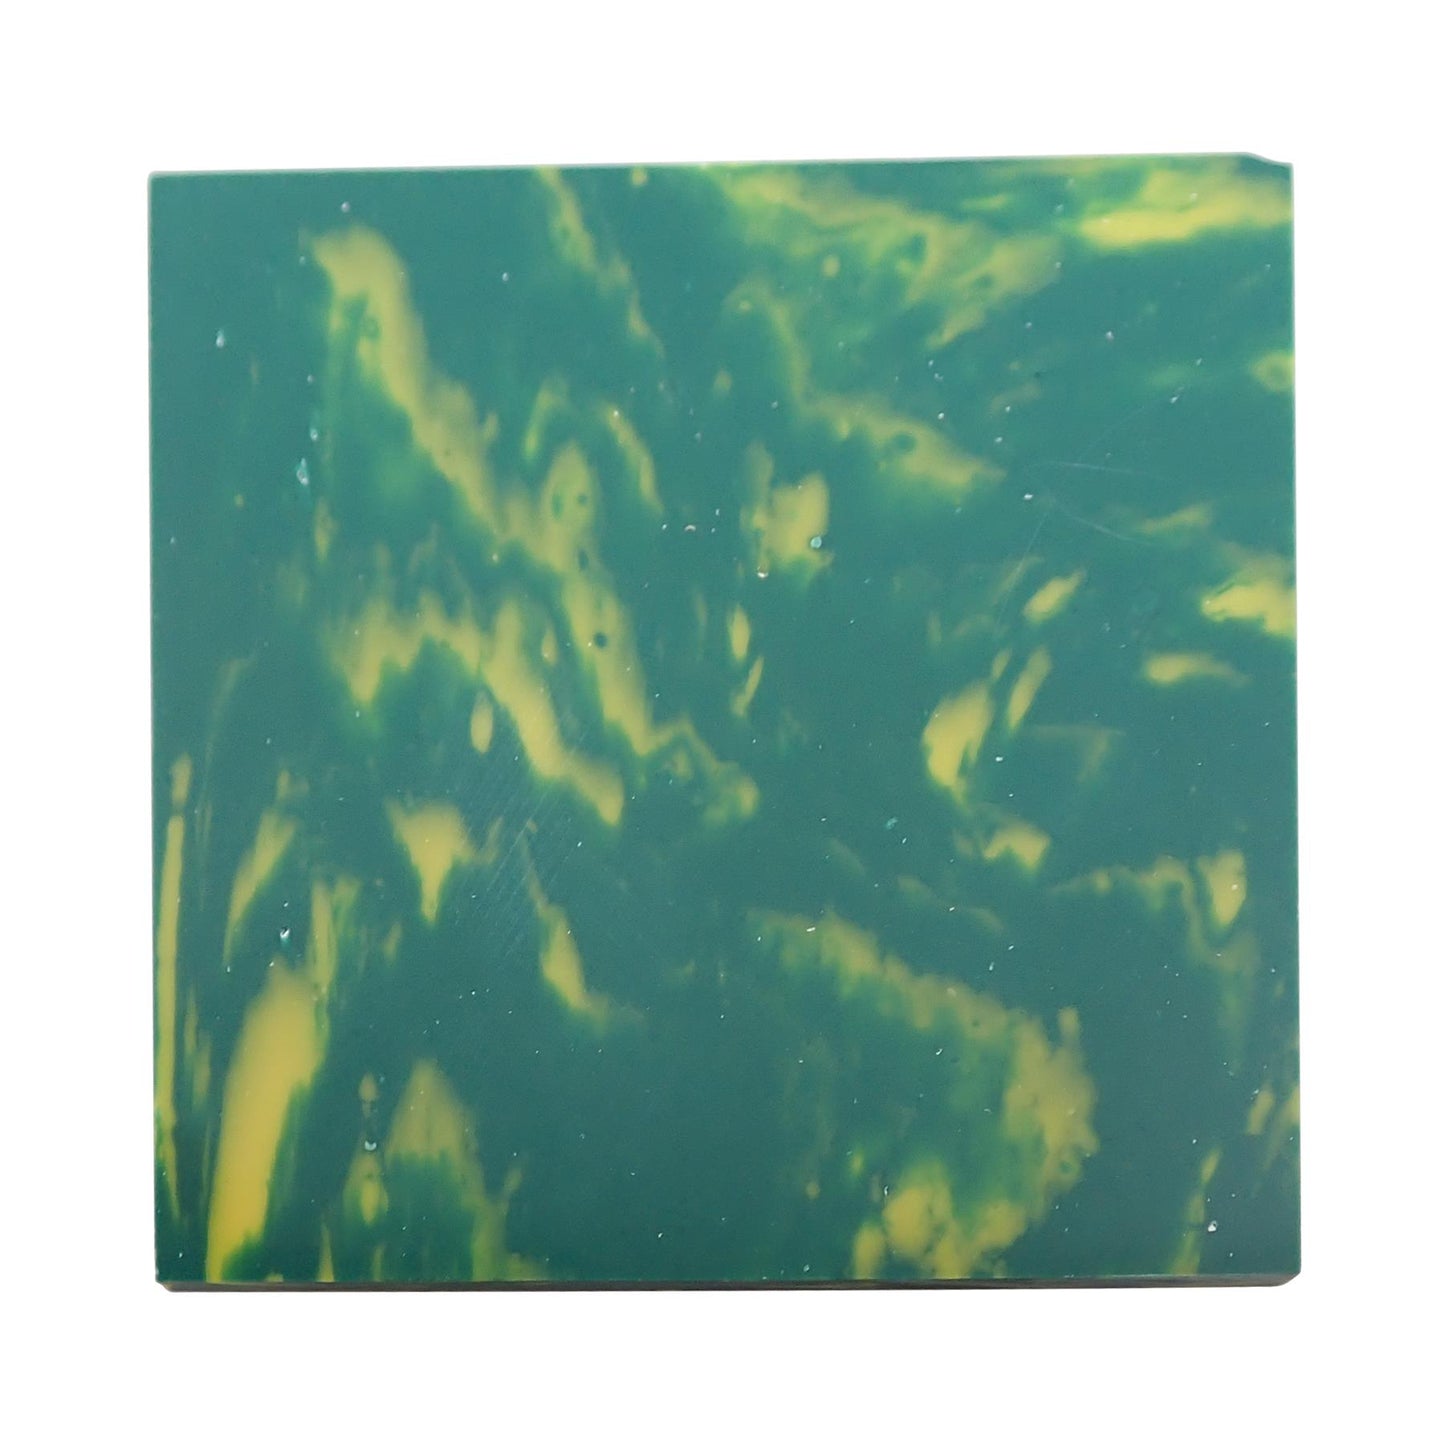 Incudo B "Arizona" Marble Jade Reconstituted Stone Inlay Blank - 50x50x3mm (2x1.97x0.12")